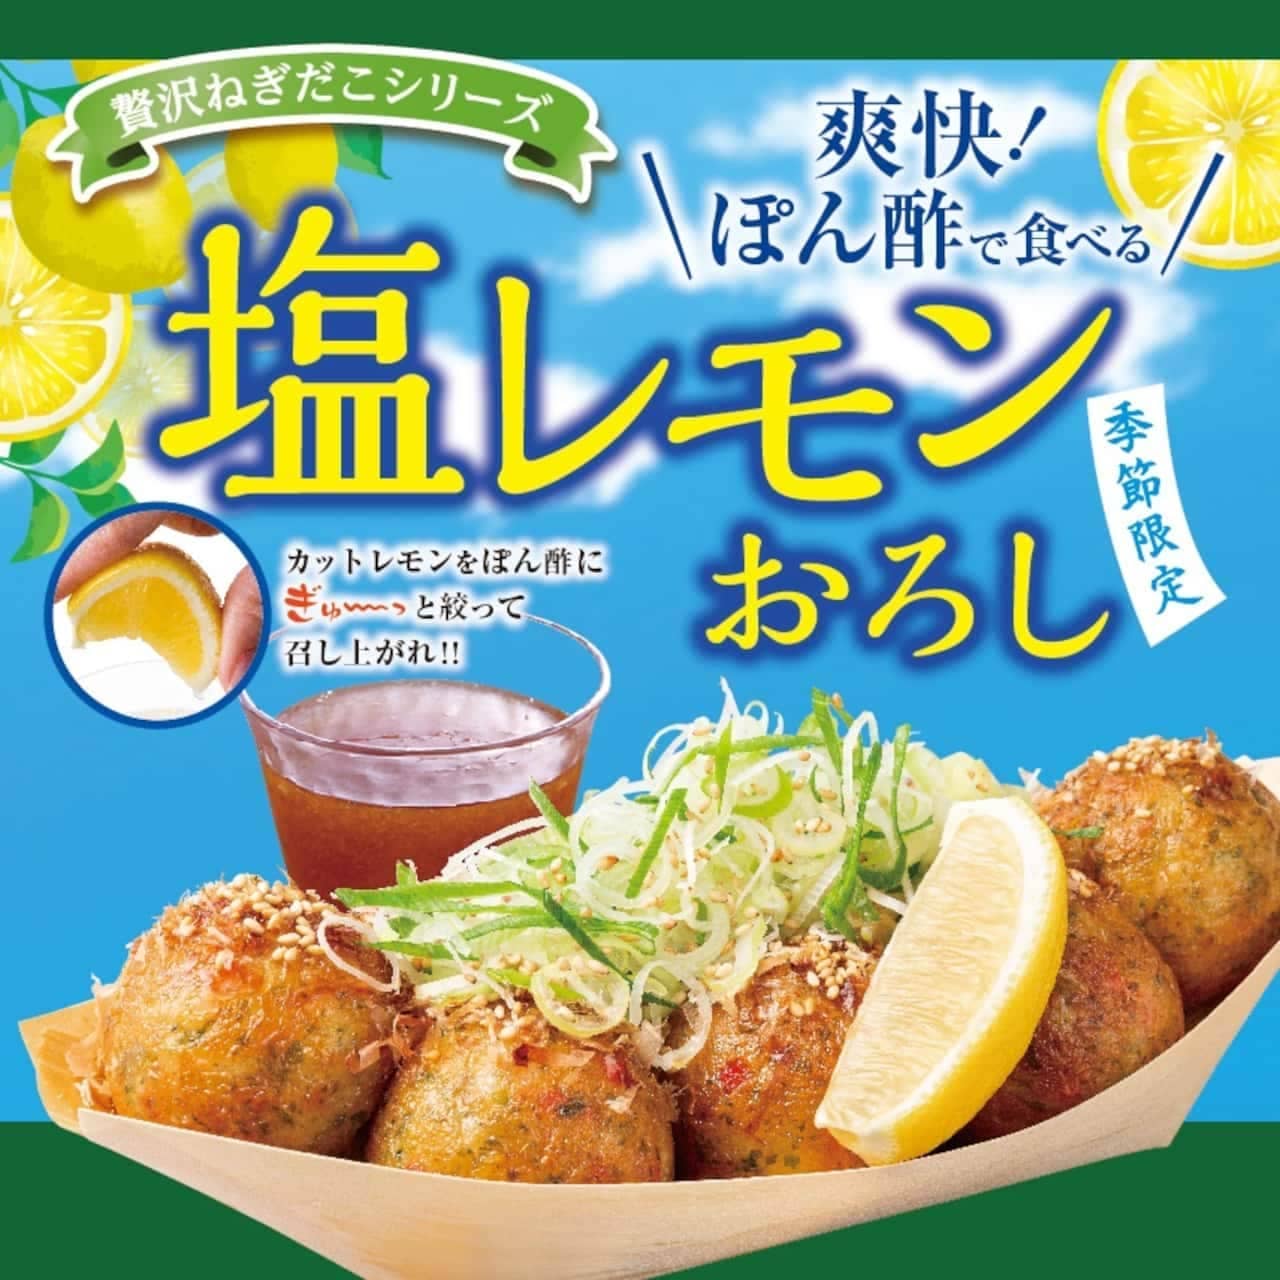 Tsukiji Gindako "Salted Lemon Grate